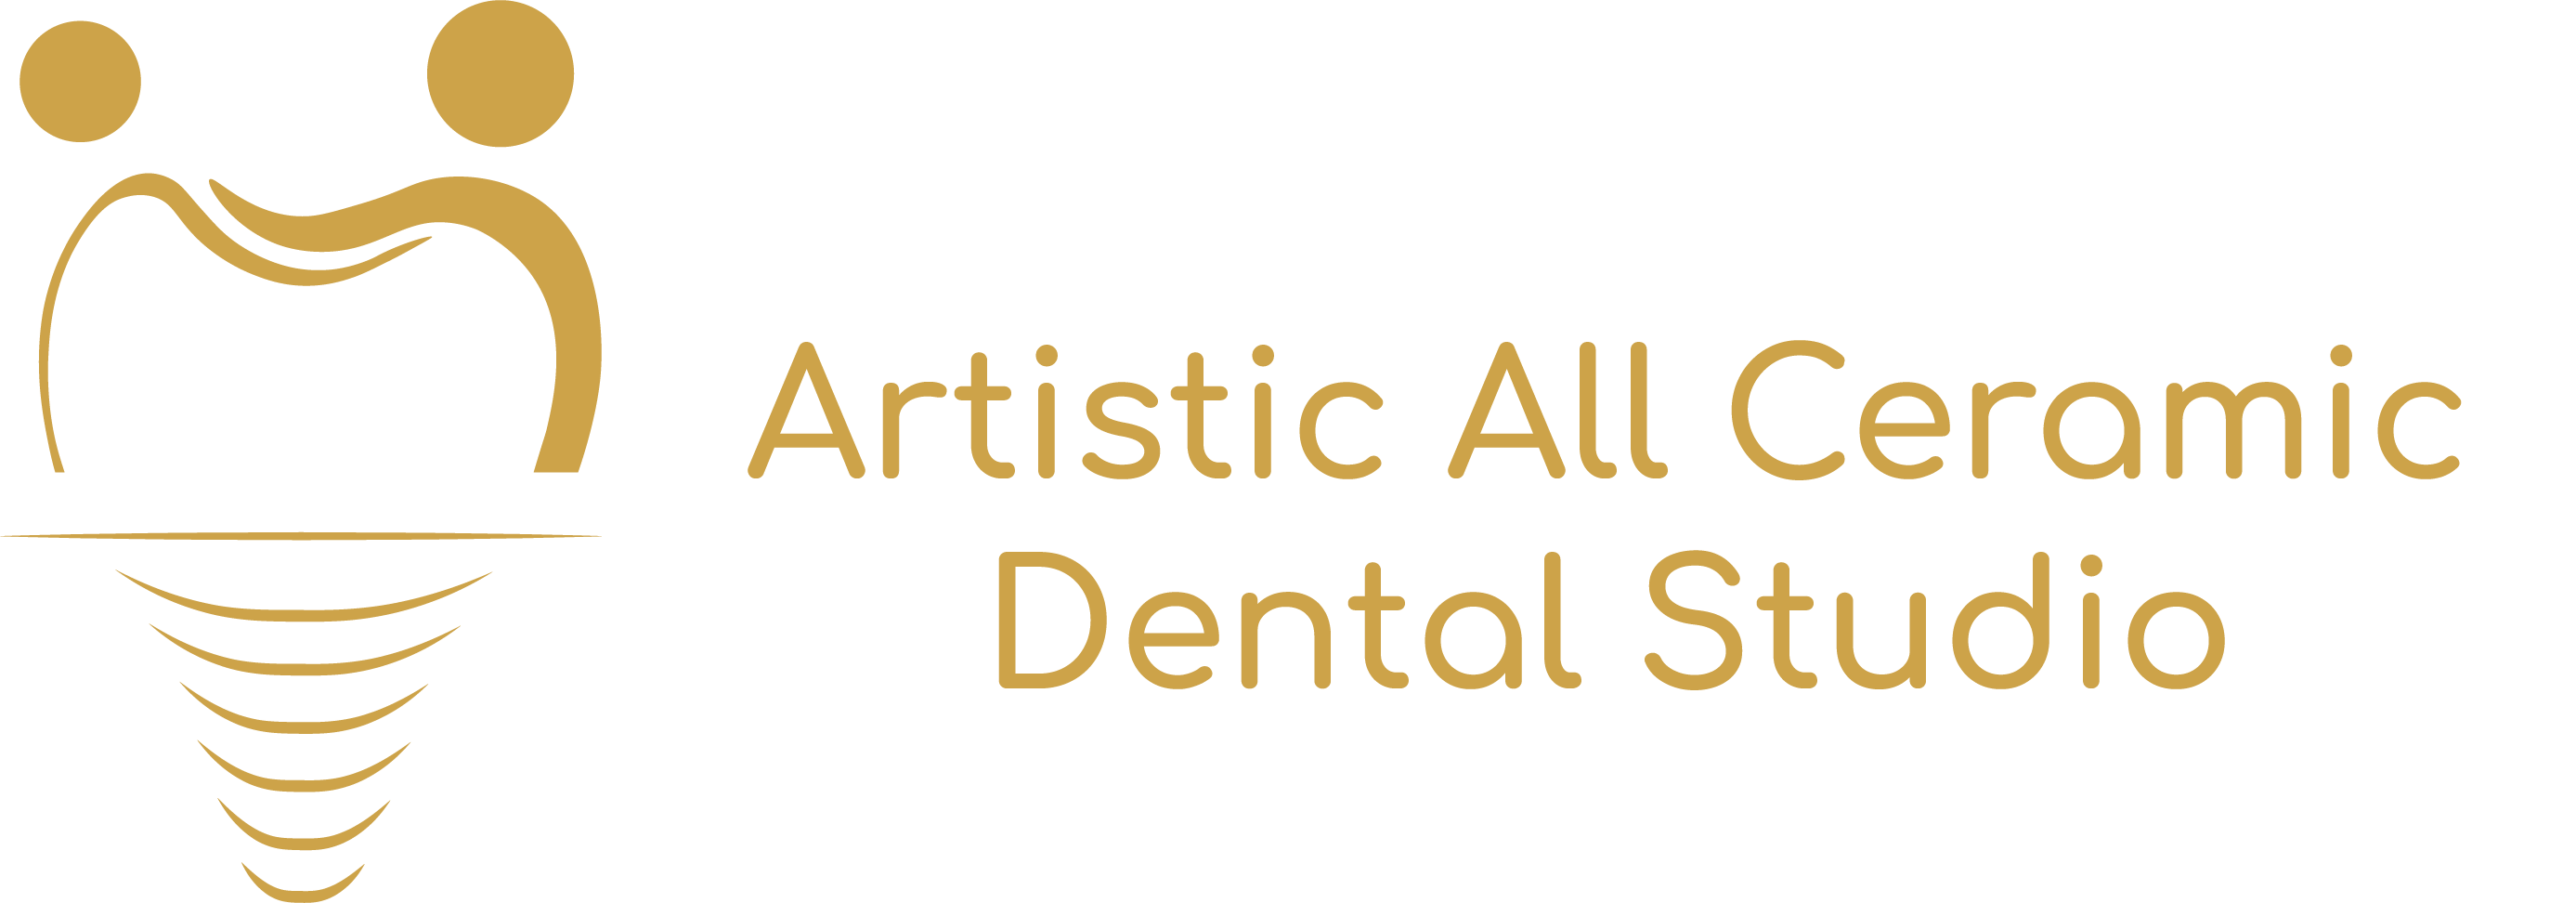 Artistic All Ceramic Dental Studio